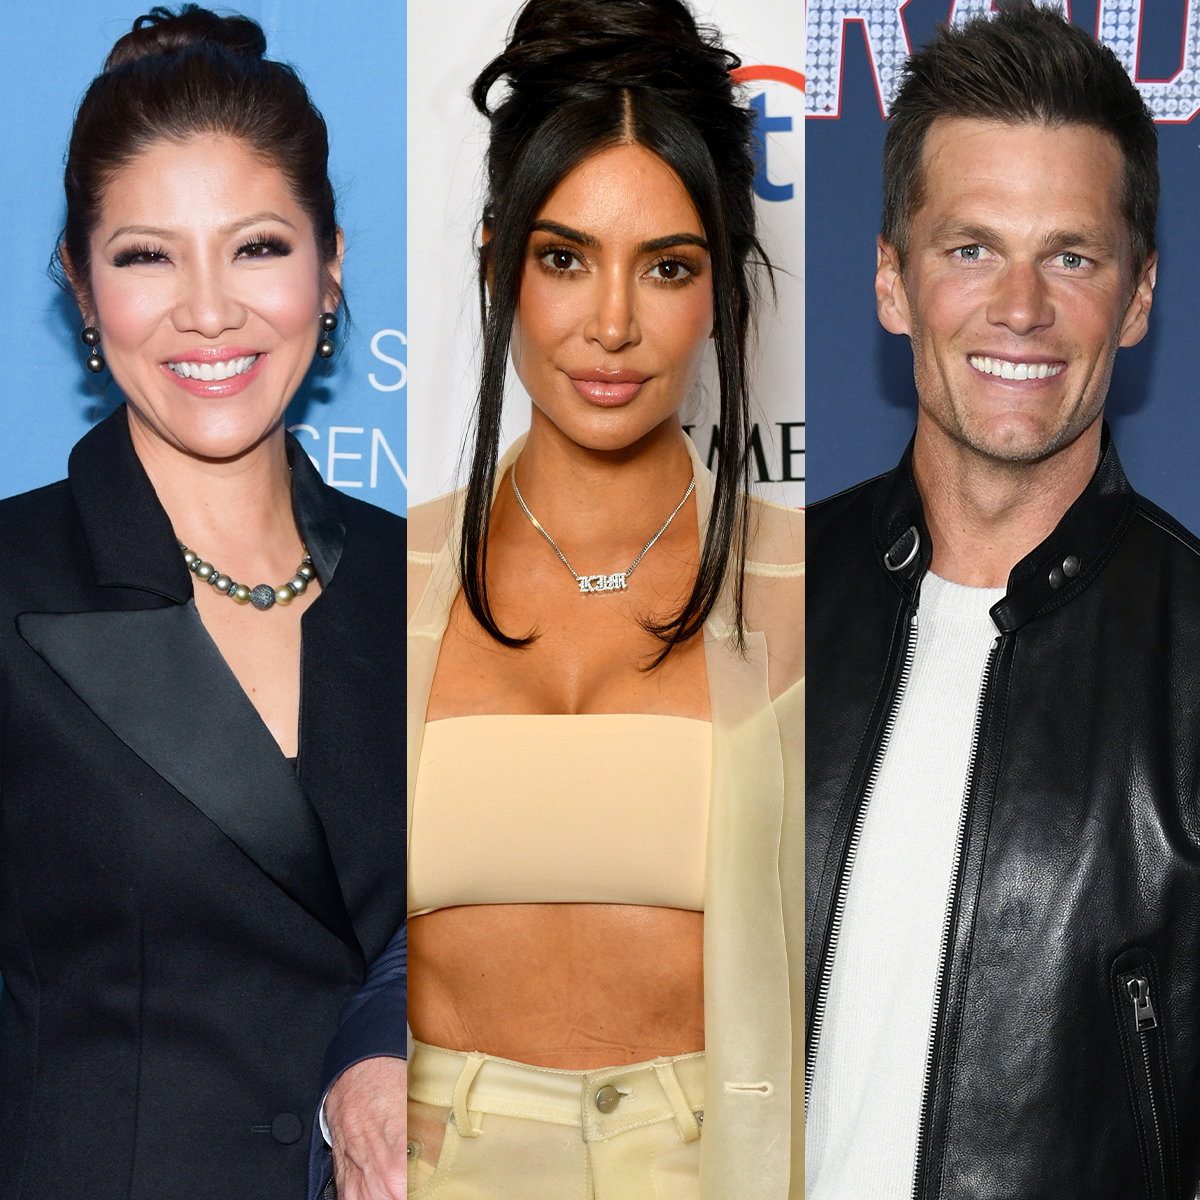 Why Julie Chen Wants Kim Kardashian & Tom Brady to Have a “Showmance”